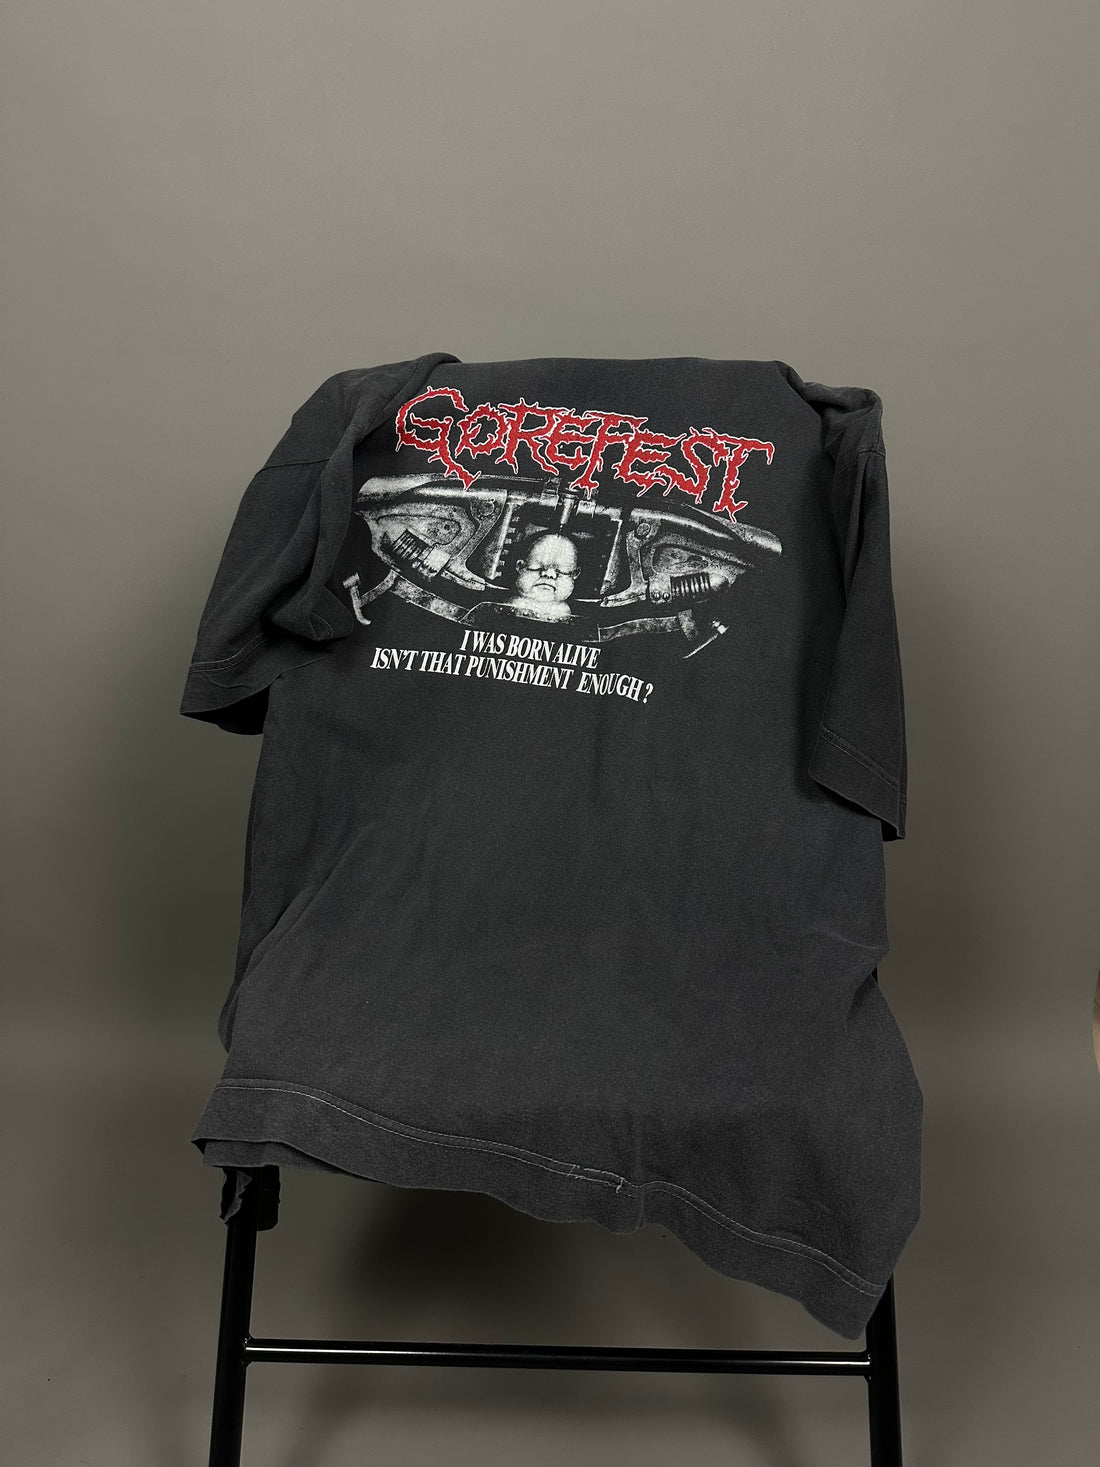 Gorefest 1991 Mindloss Vintage T-Shirt